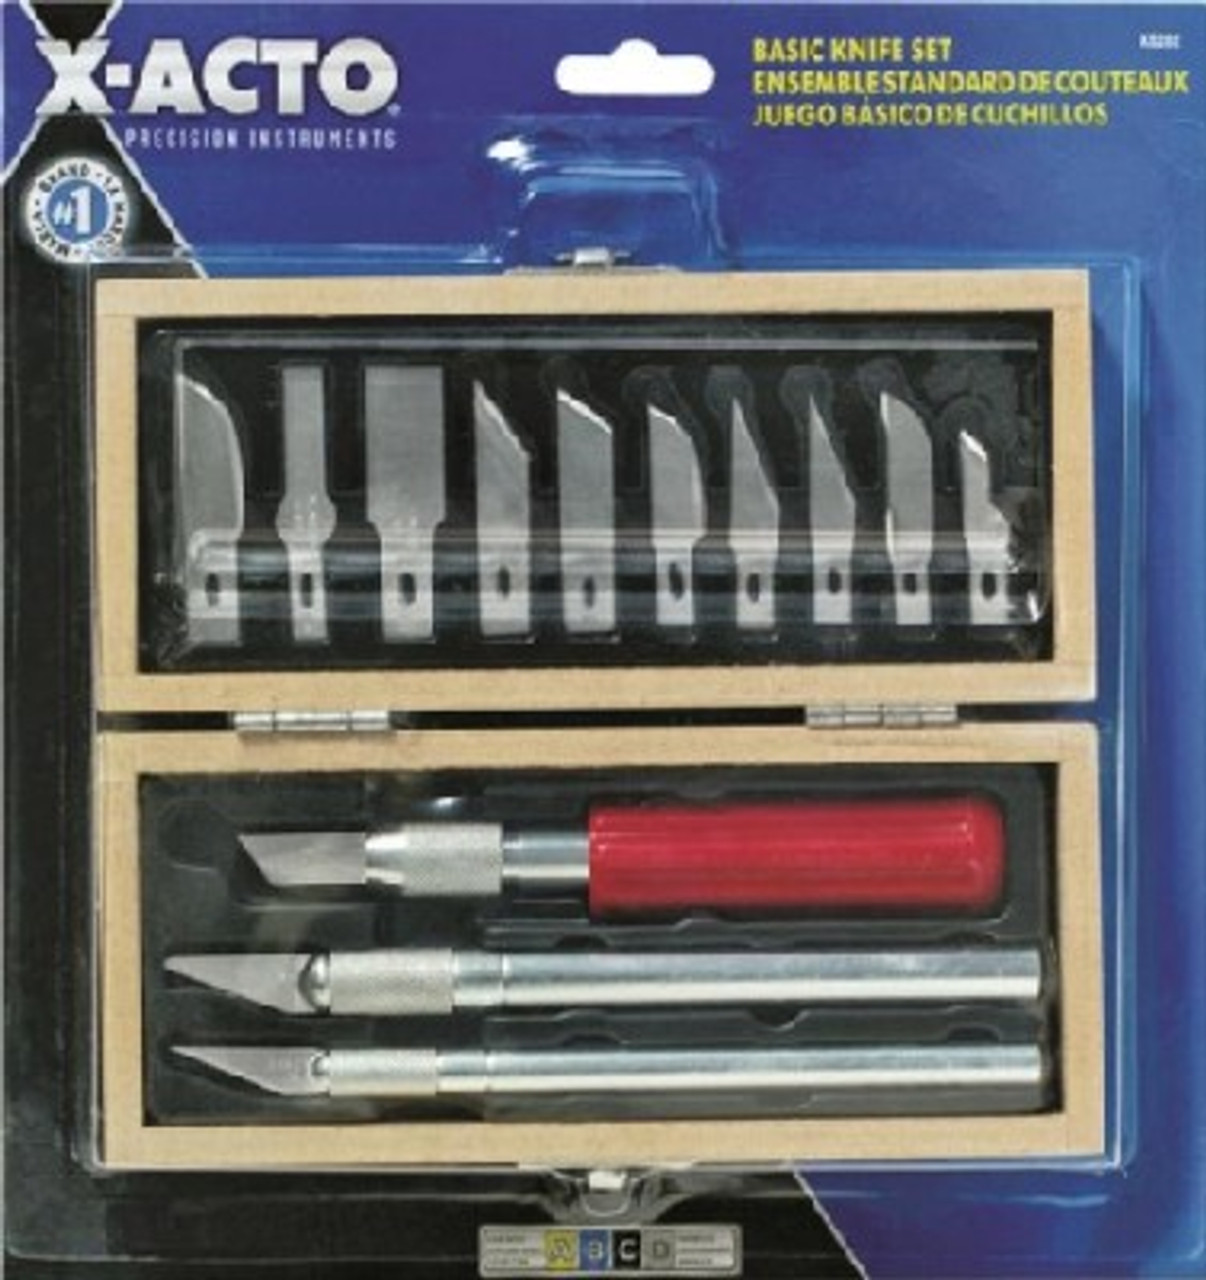 X-acto #2 Medium Duty Knife